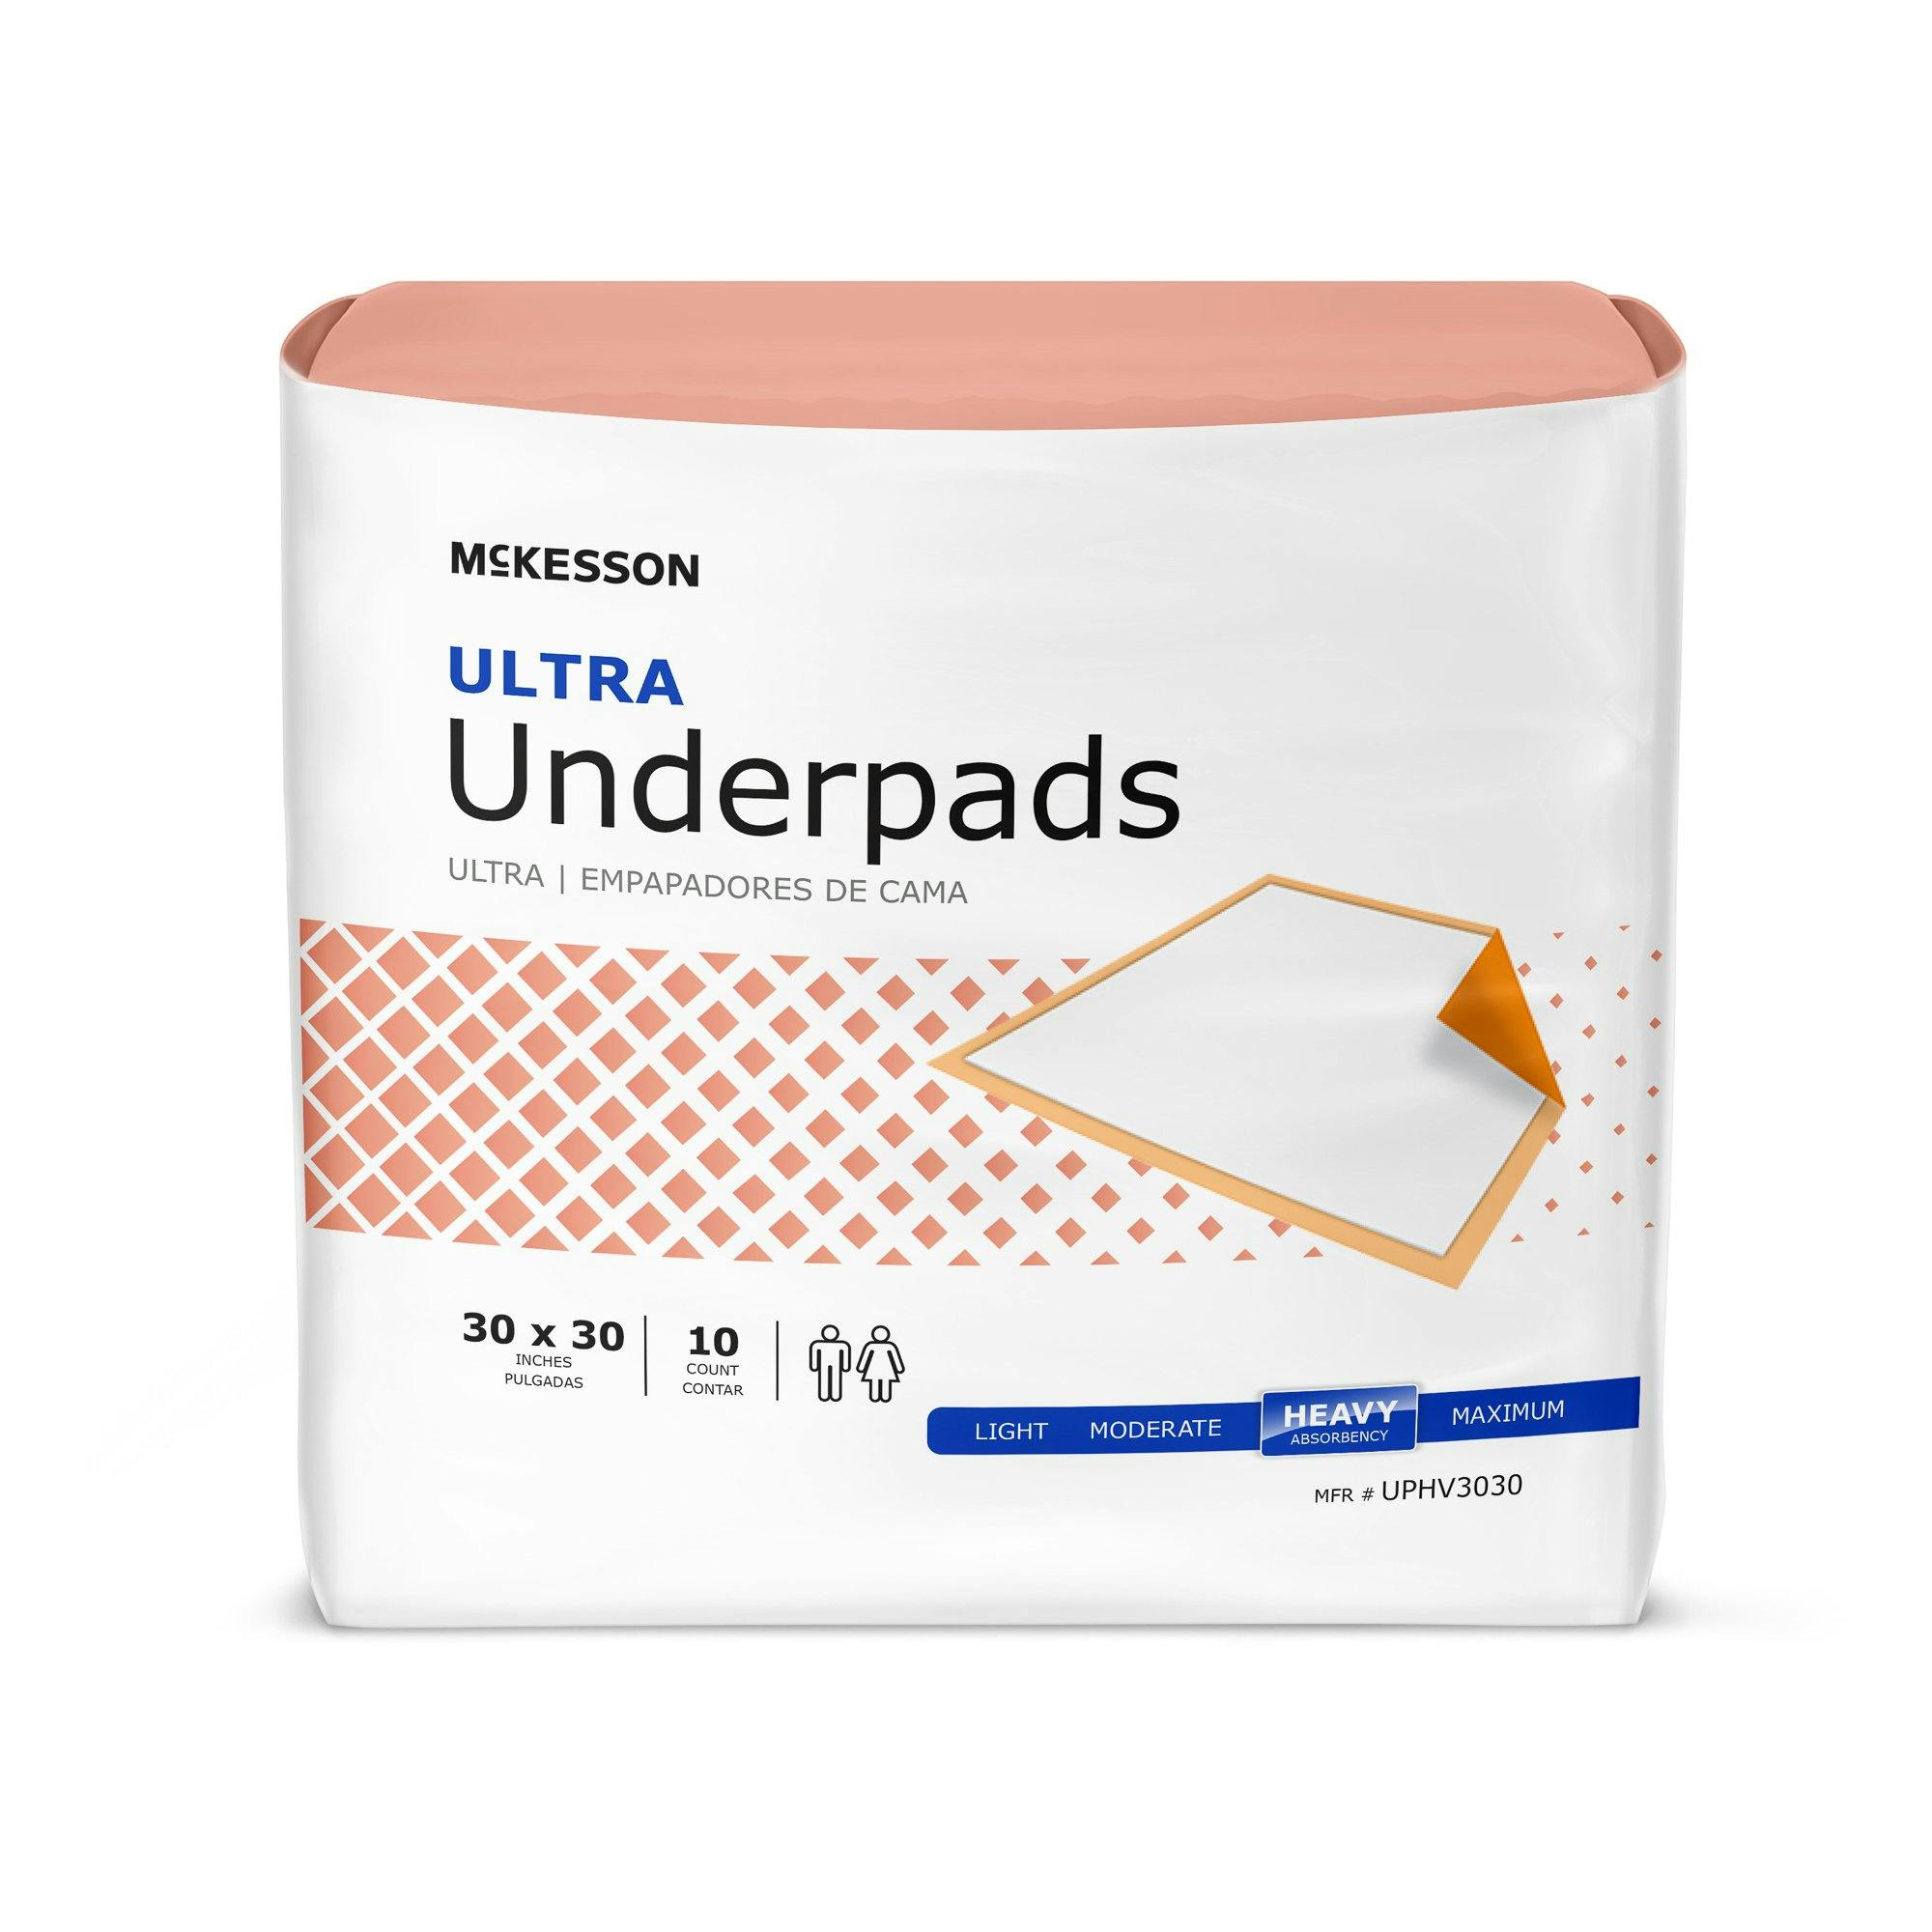 McKesson Underpads, Ultra, 30"X 36", UPHV3036-BG10, Bag 10